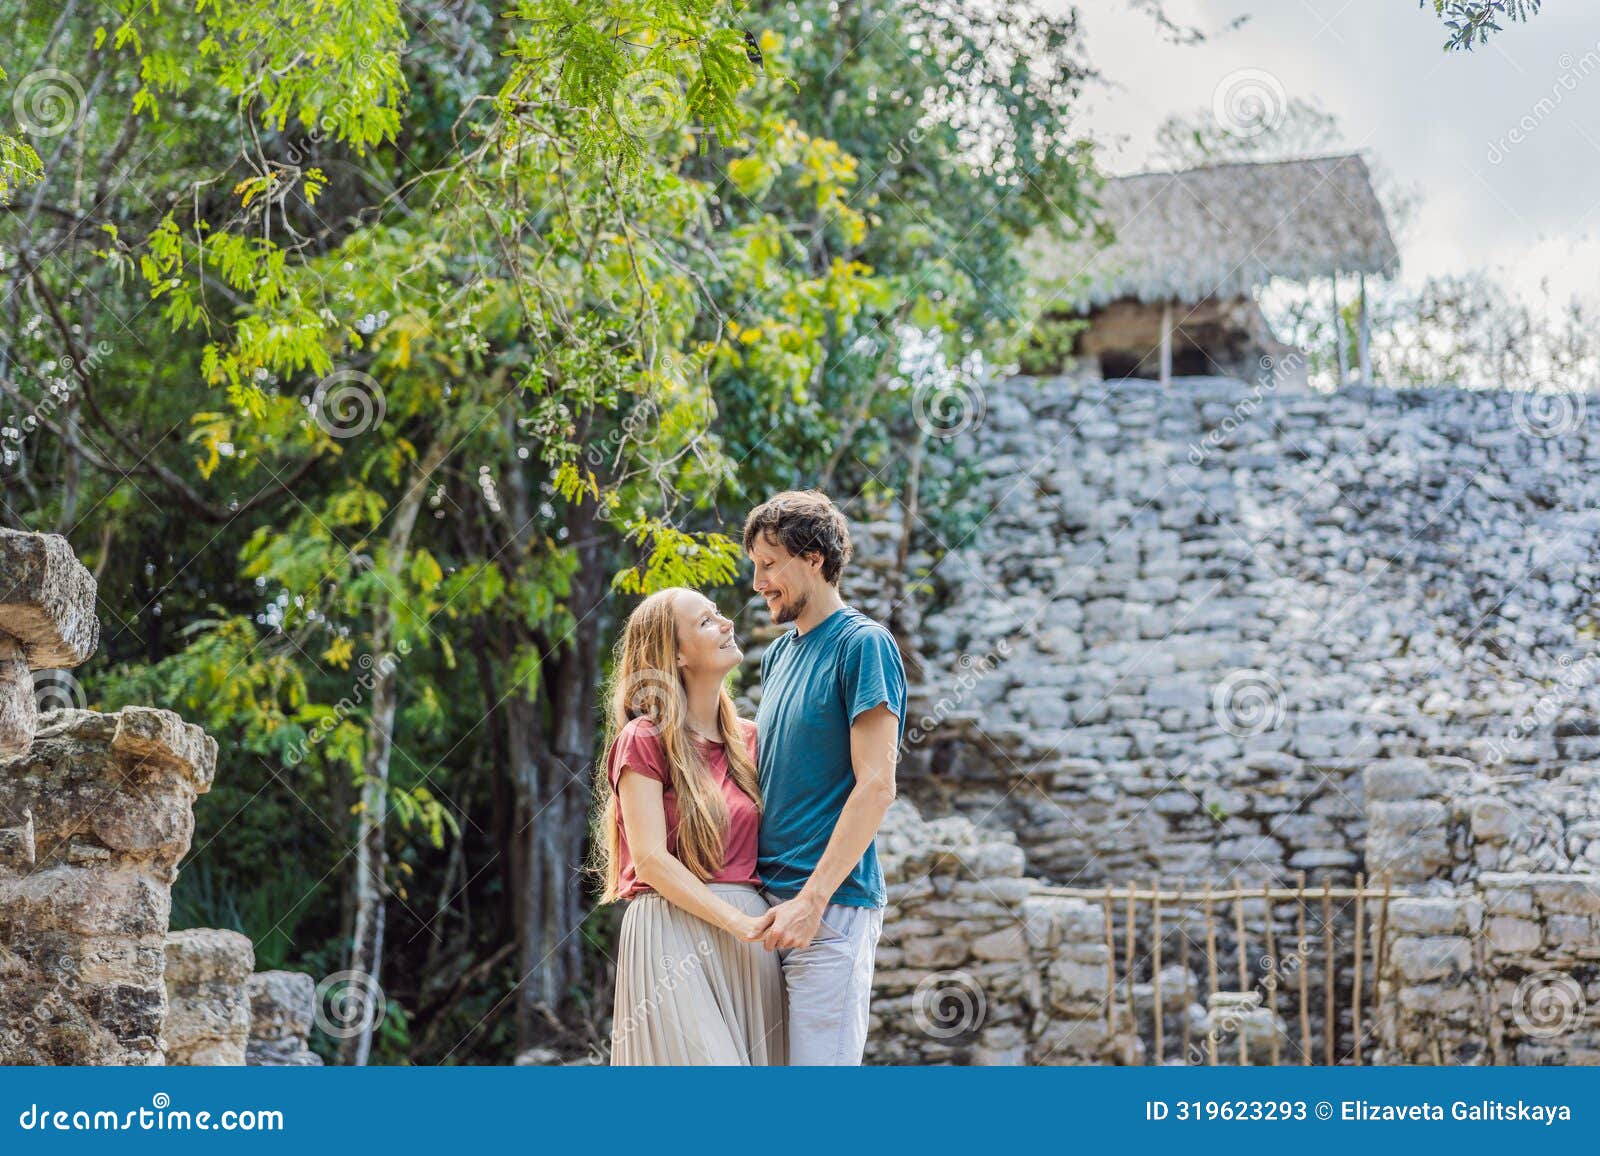 Couple, Man and Woman Tourists at Coba, Mexico. Honeymoon Ancient Mayan ...